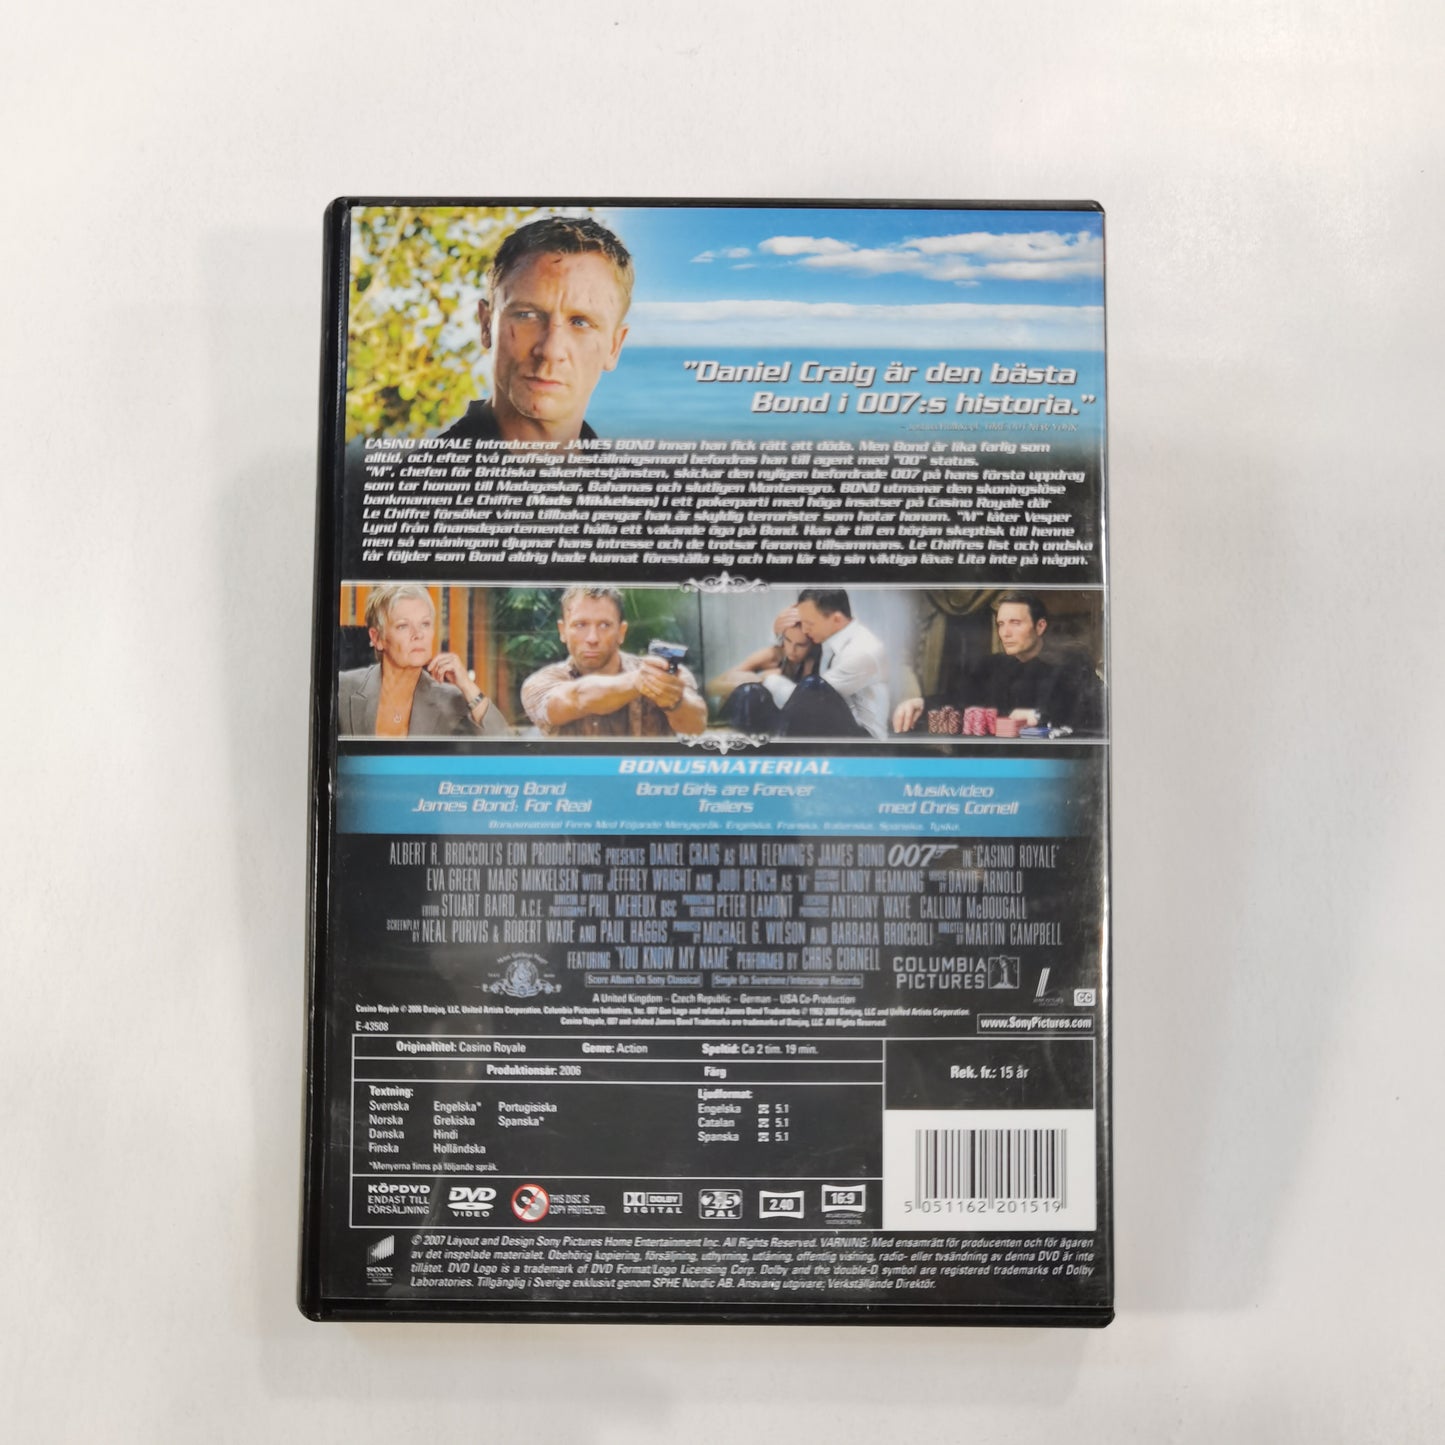 007: Casino Royale (2006) - DVD SE 2007 2-Disc Collector's Edition